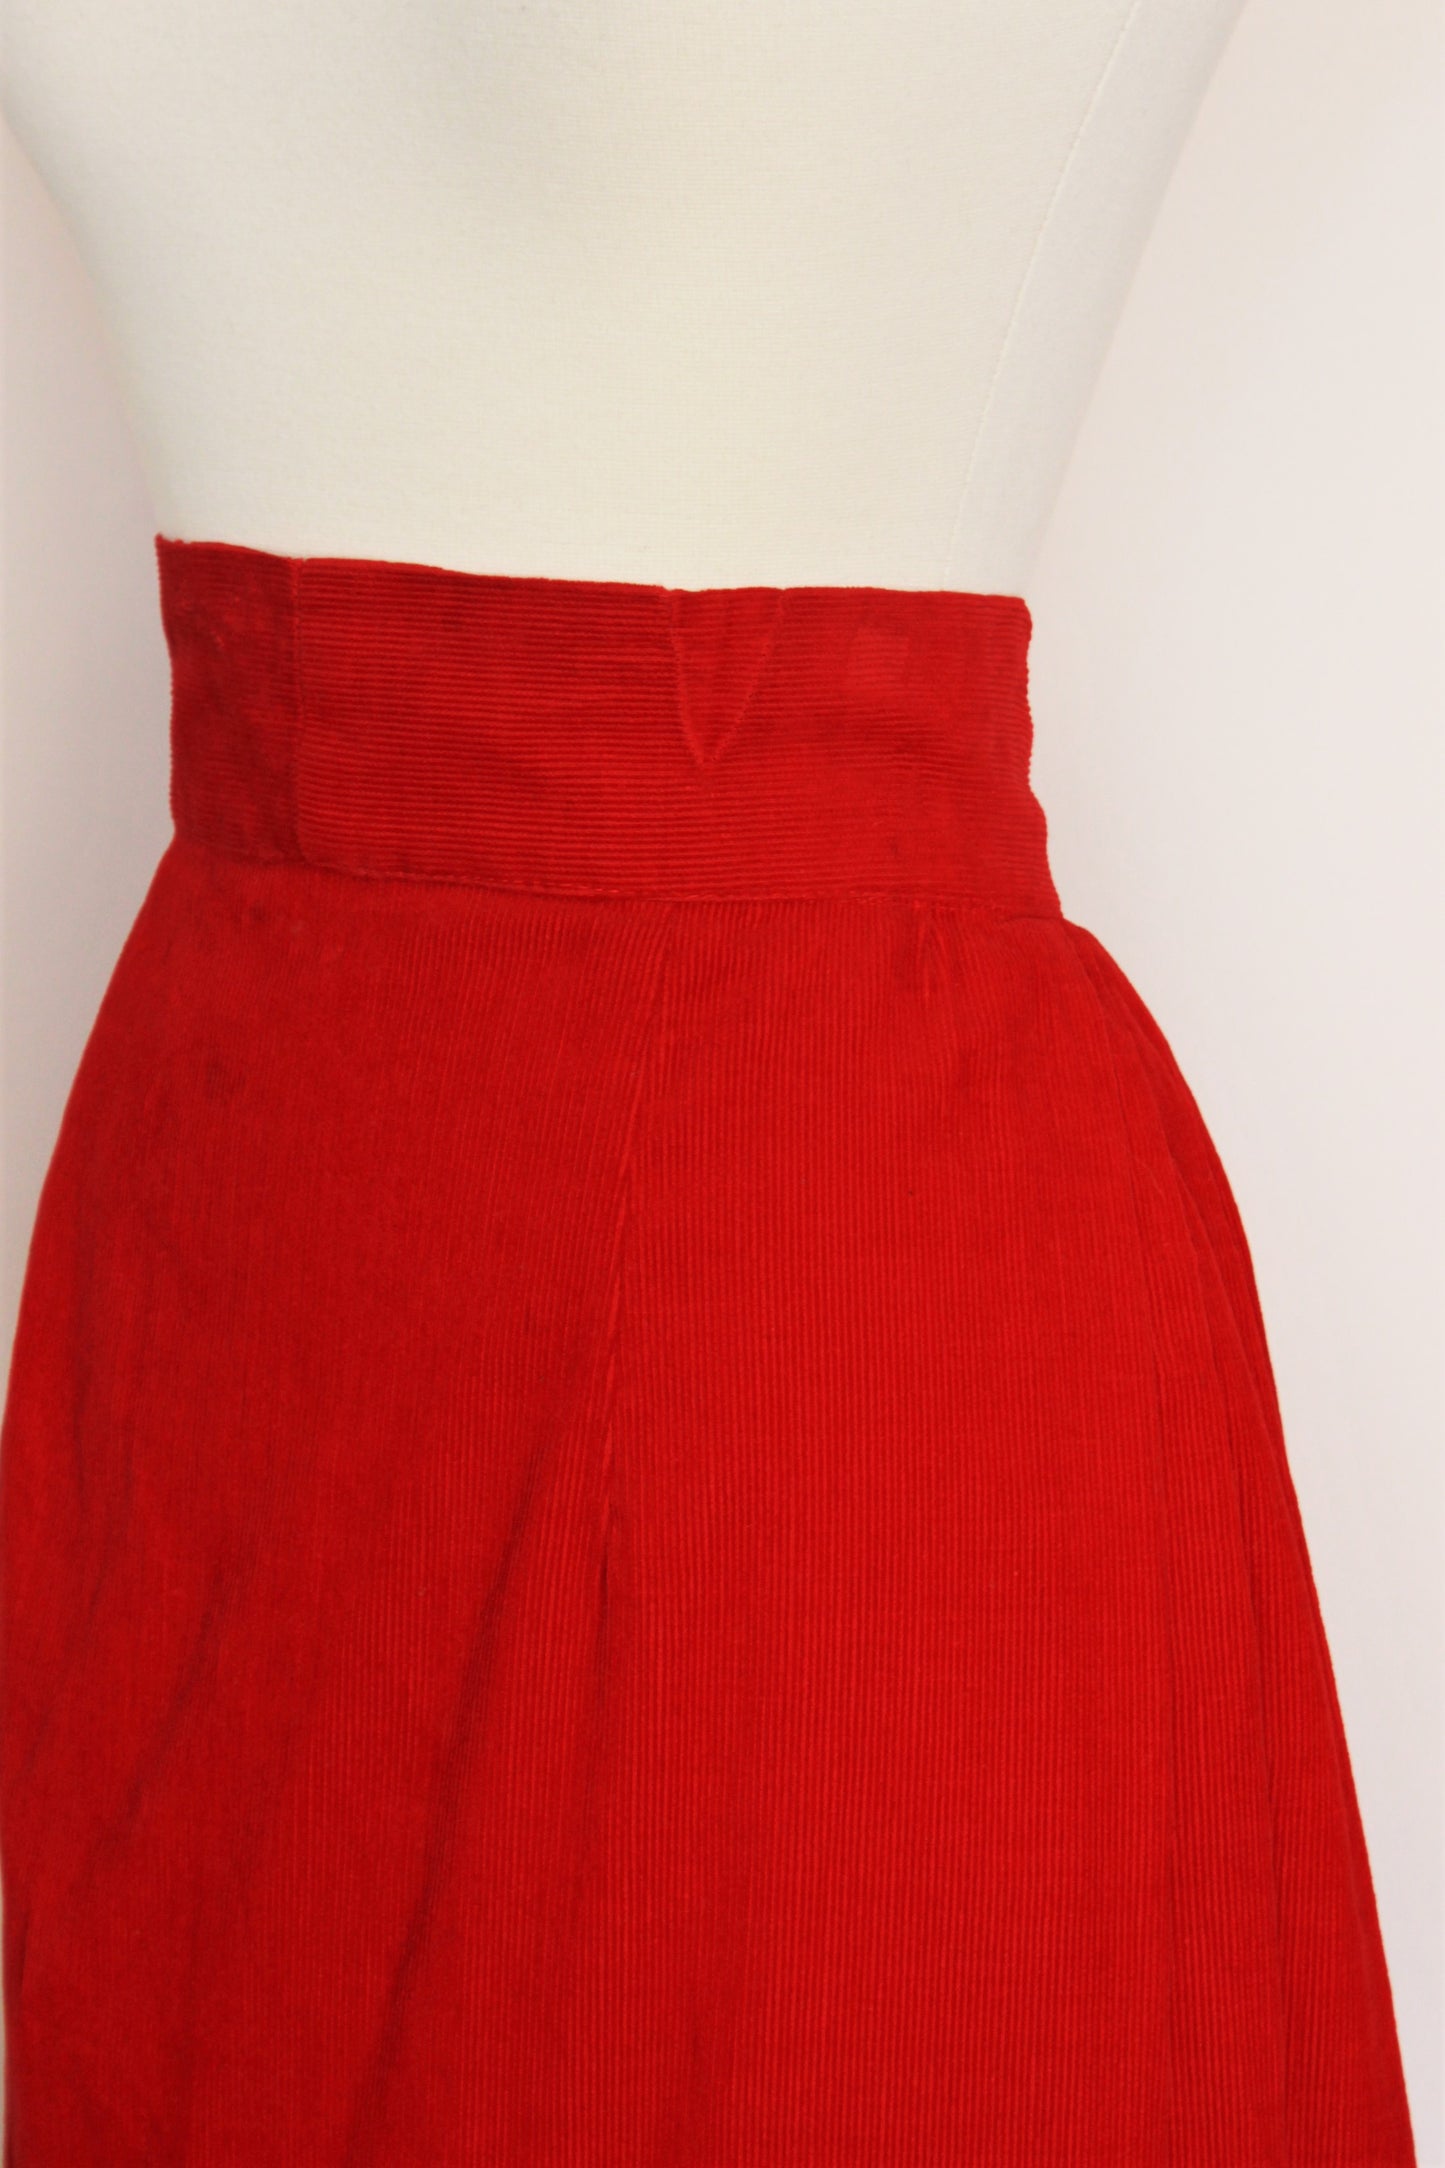 Vintage 1940s Does 1900s Red Corduroy Skirt – Toadstool Farm Vintage